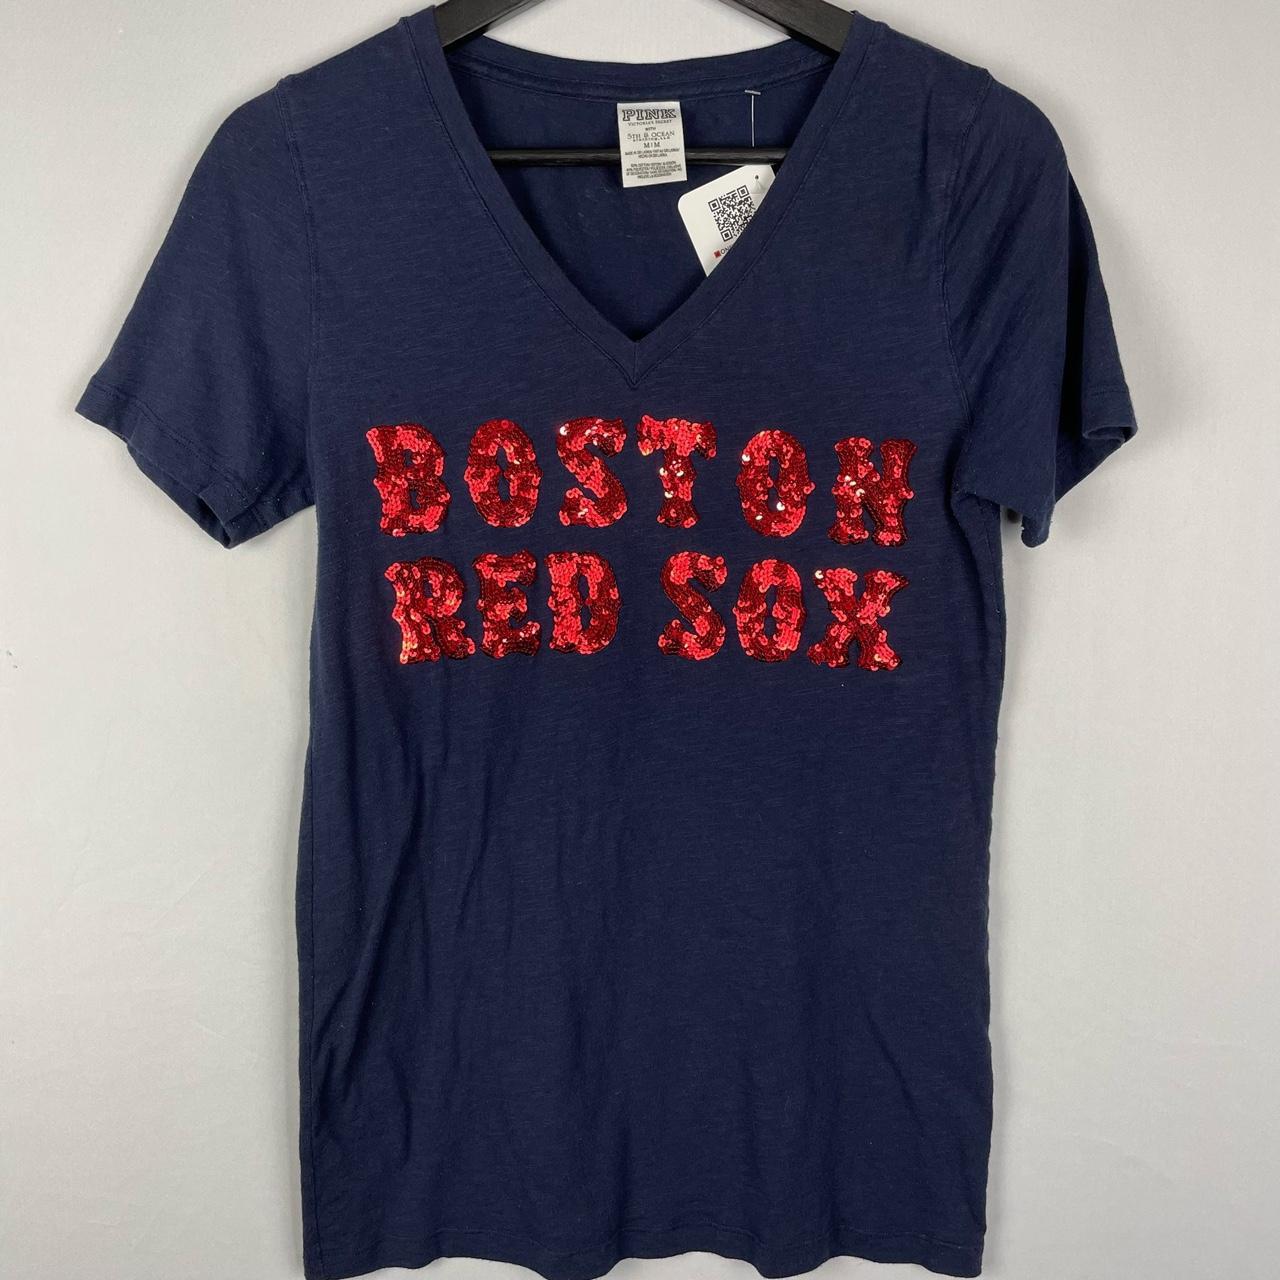 Vintage Boston Red Sox Shirt Size - XL Color - Grey - Depop